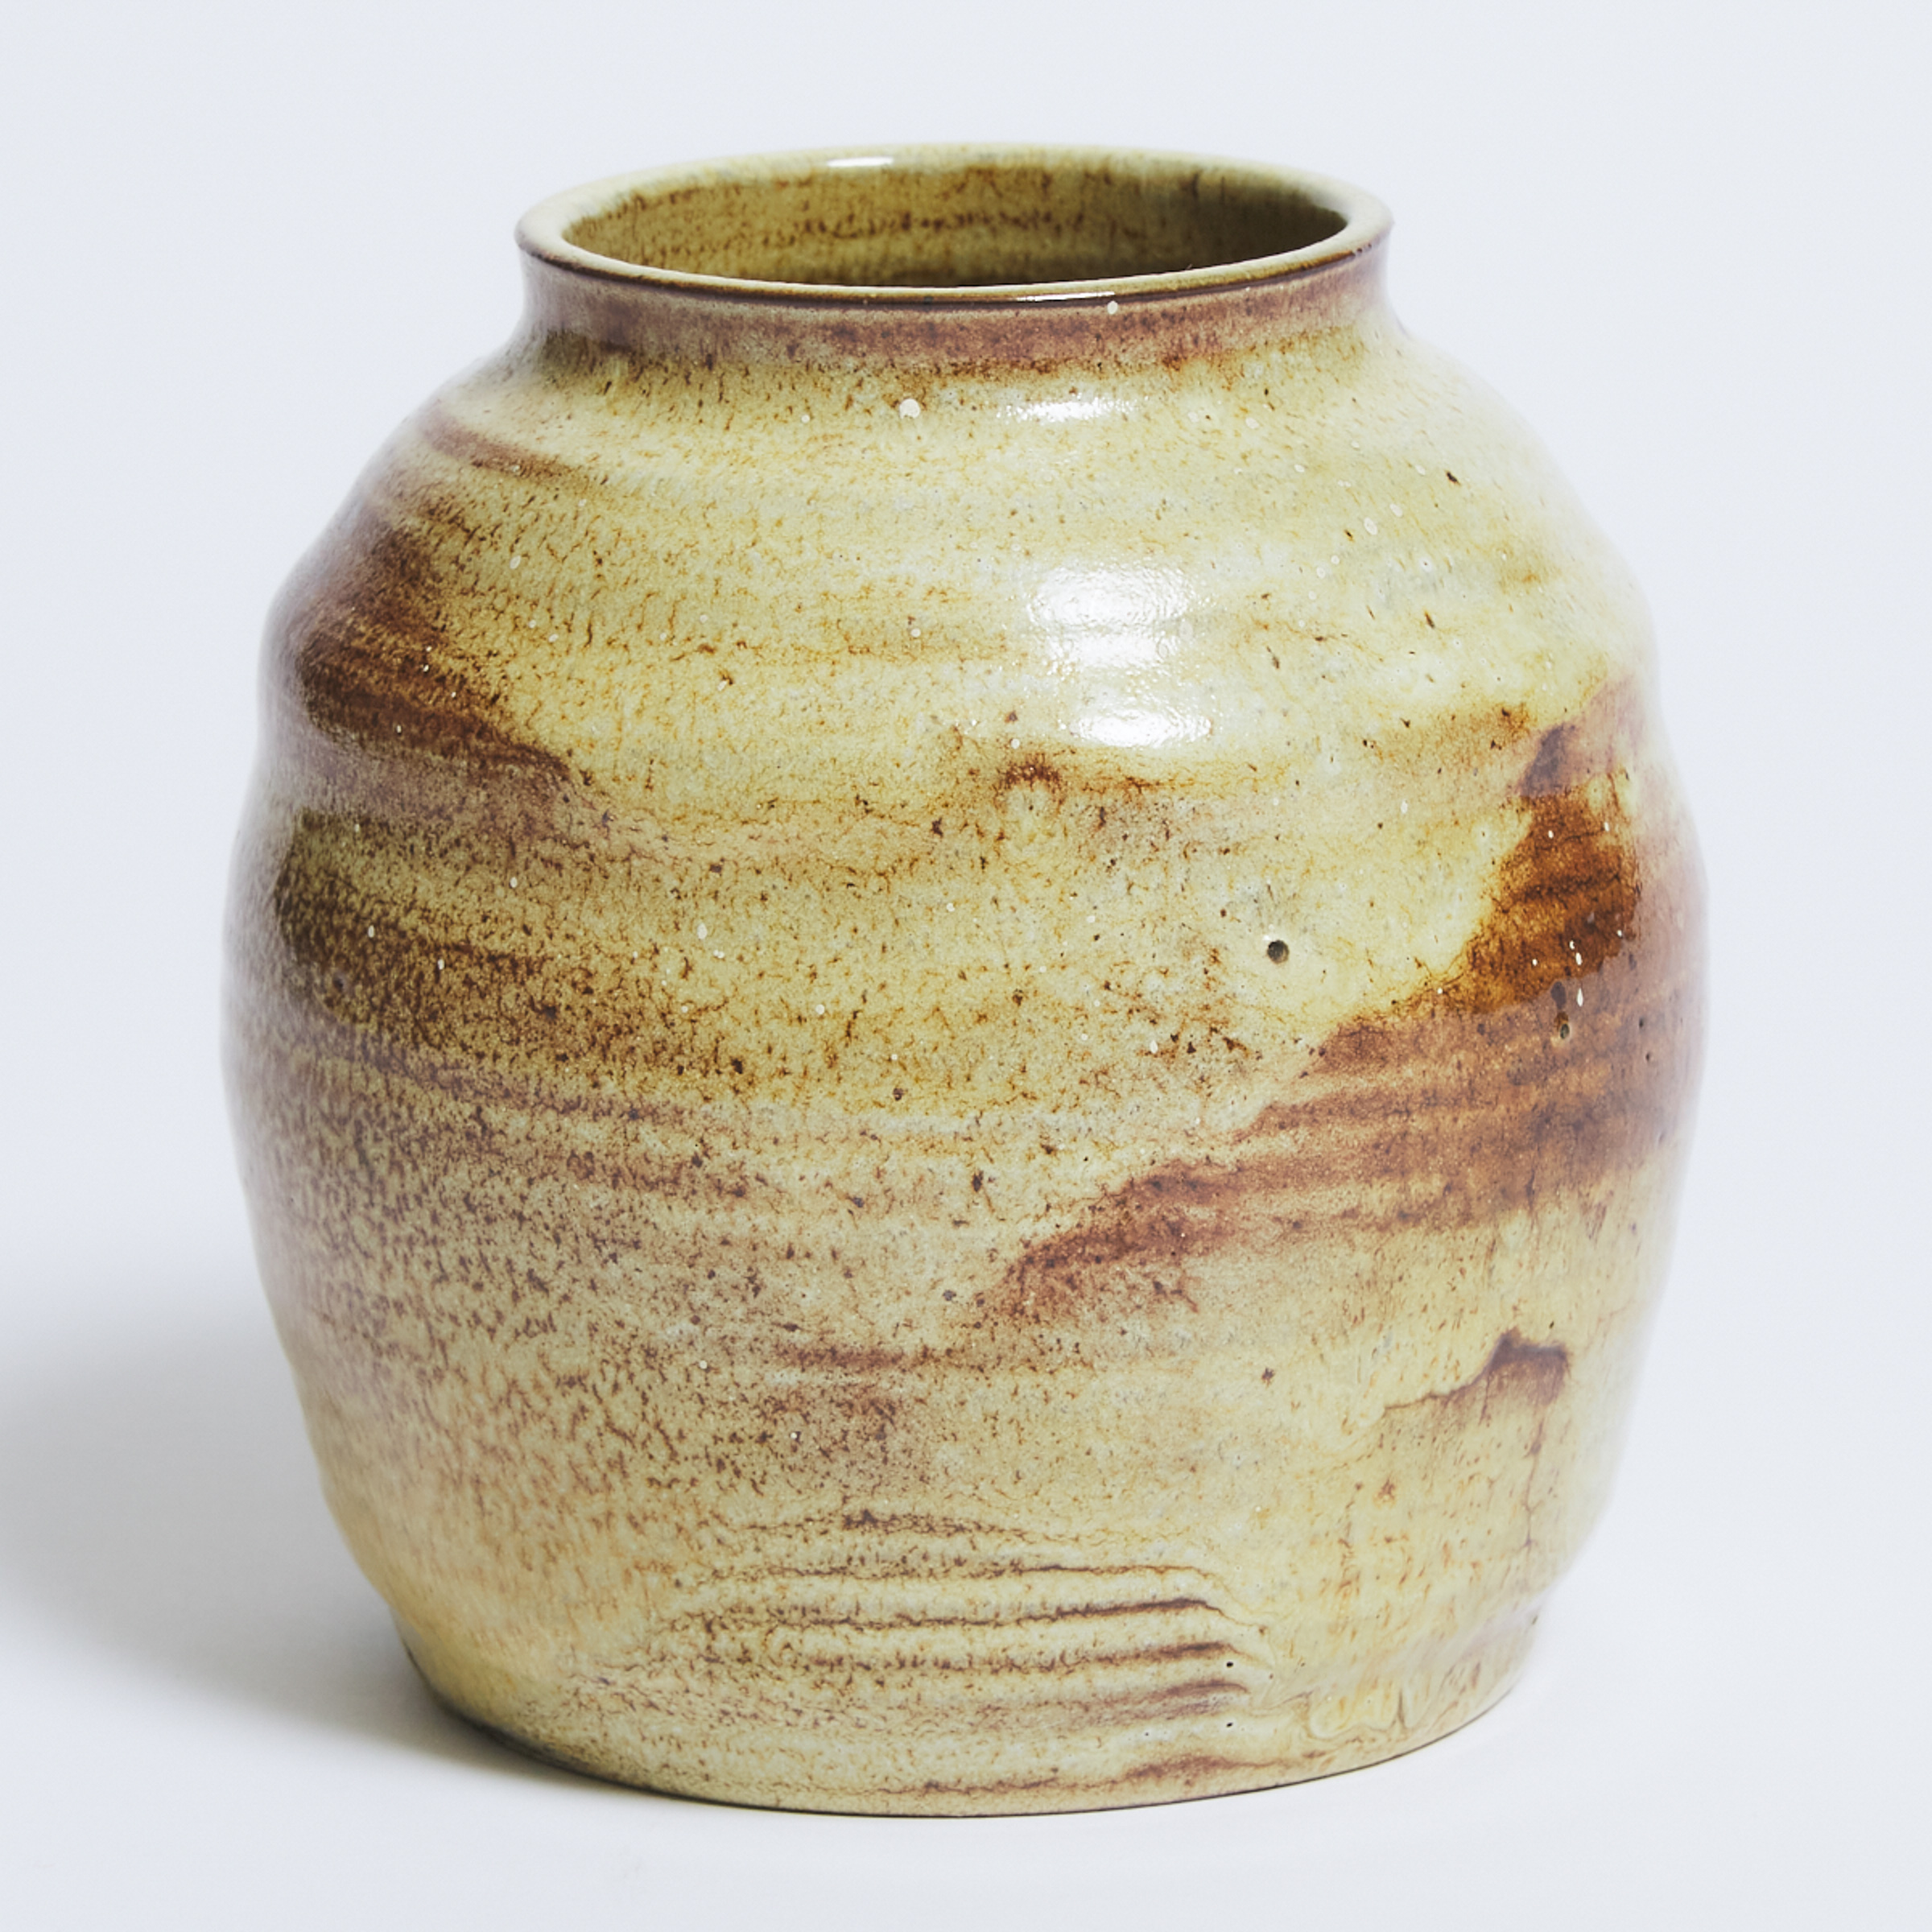 Deichmann Mottled Glazed Stoneware Vase, Kjeld & Erica Deichmann, c.1950